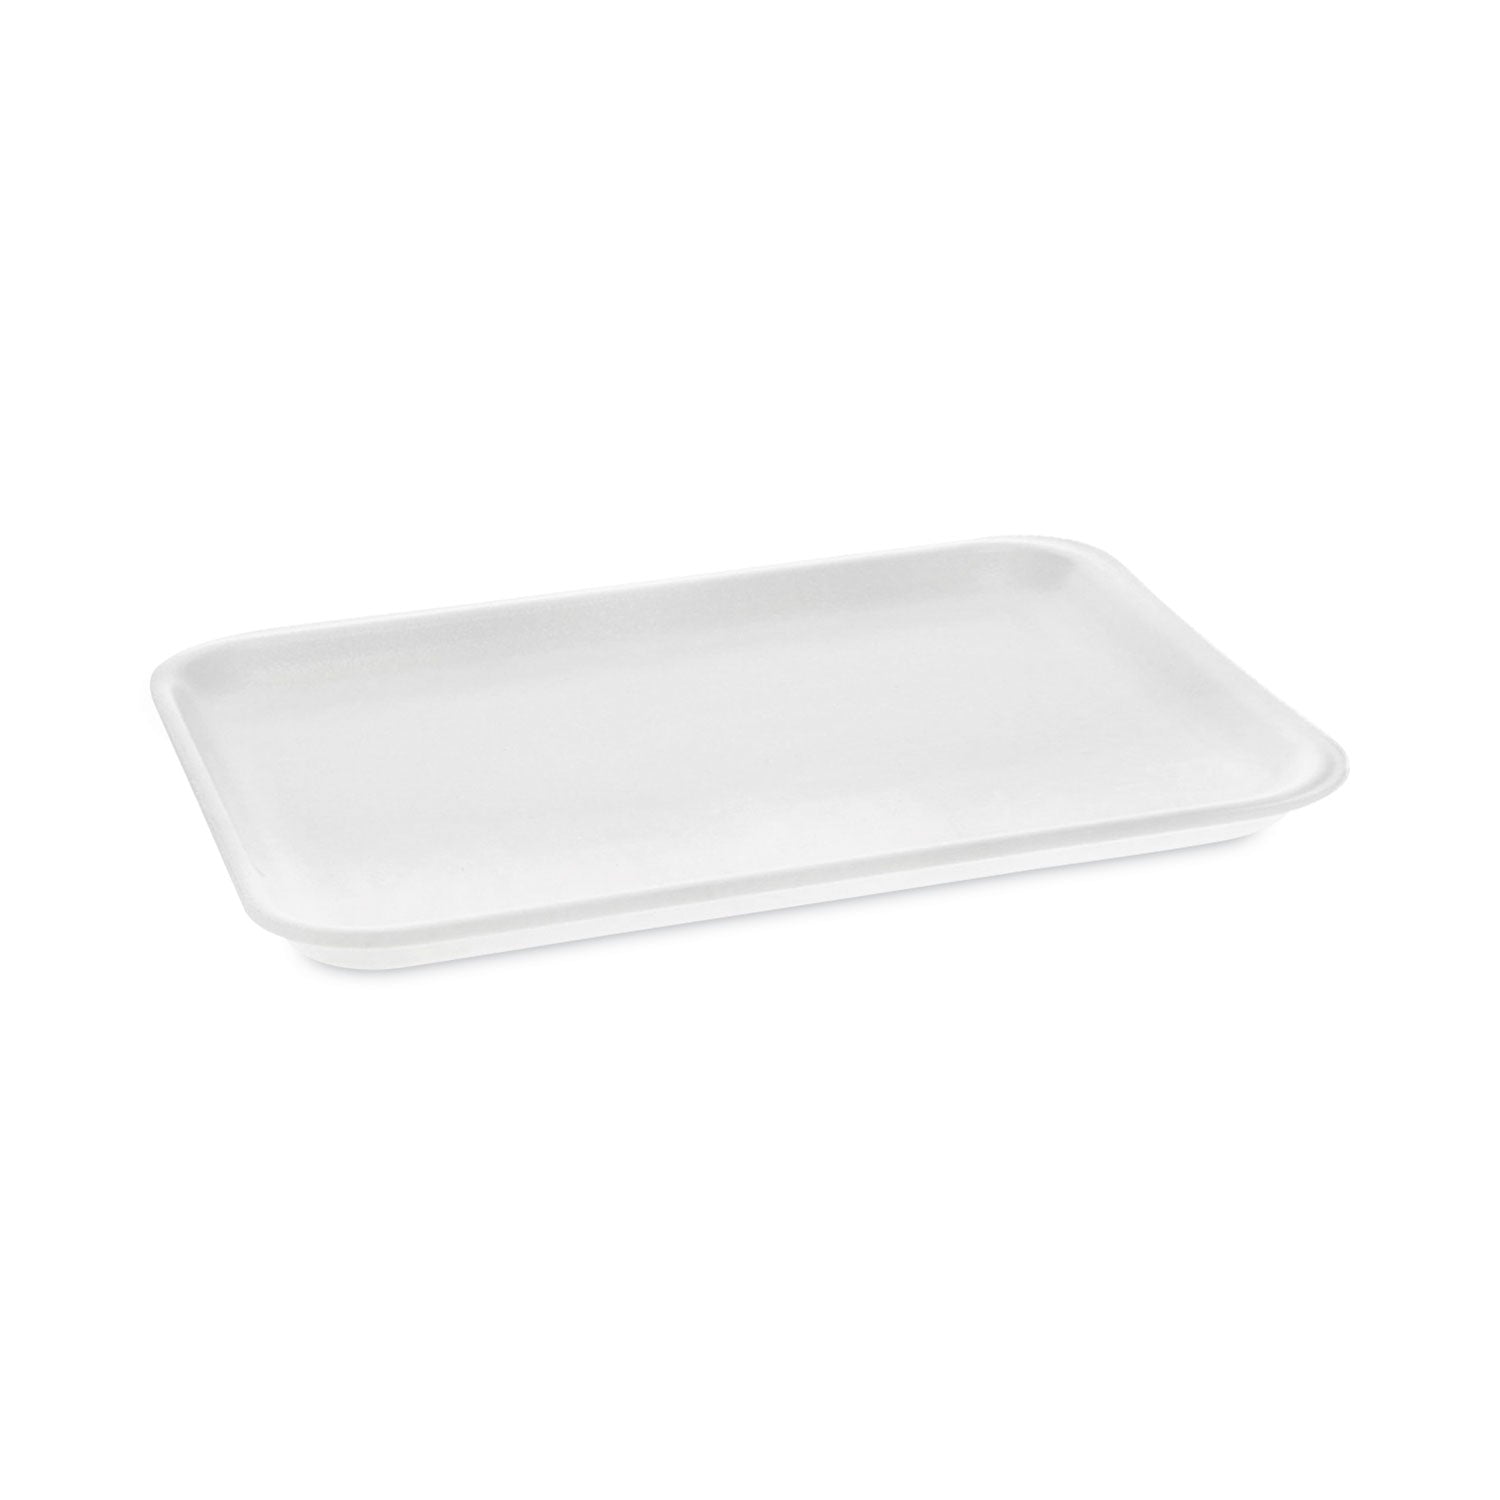 meat-tray-#4-shallow-913-x-713-x-065-white-foam-500-carton_pct0tf104s00000 - 1